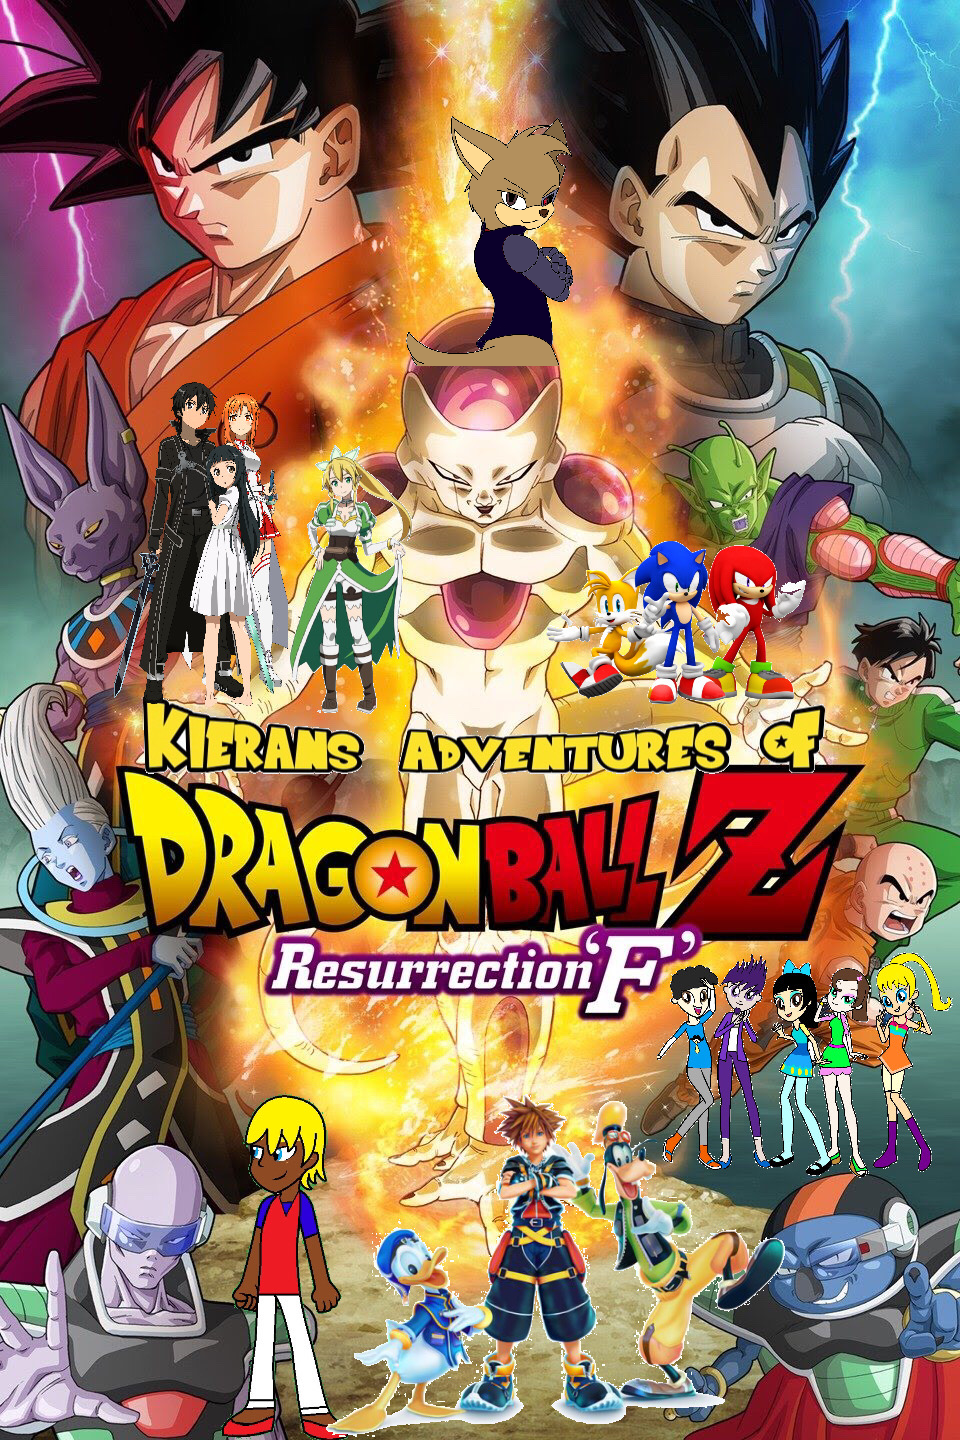  Dragonball Z: The Anime Adventure Game: 9781891933004